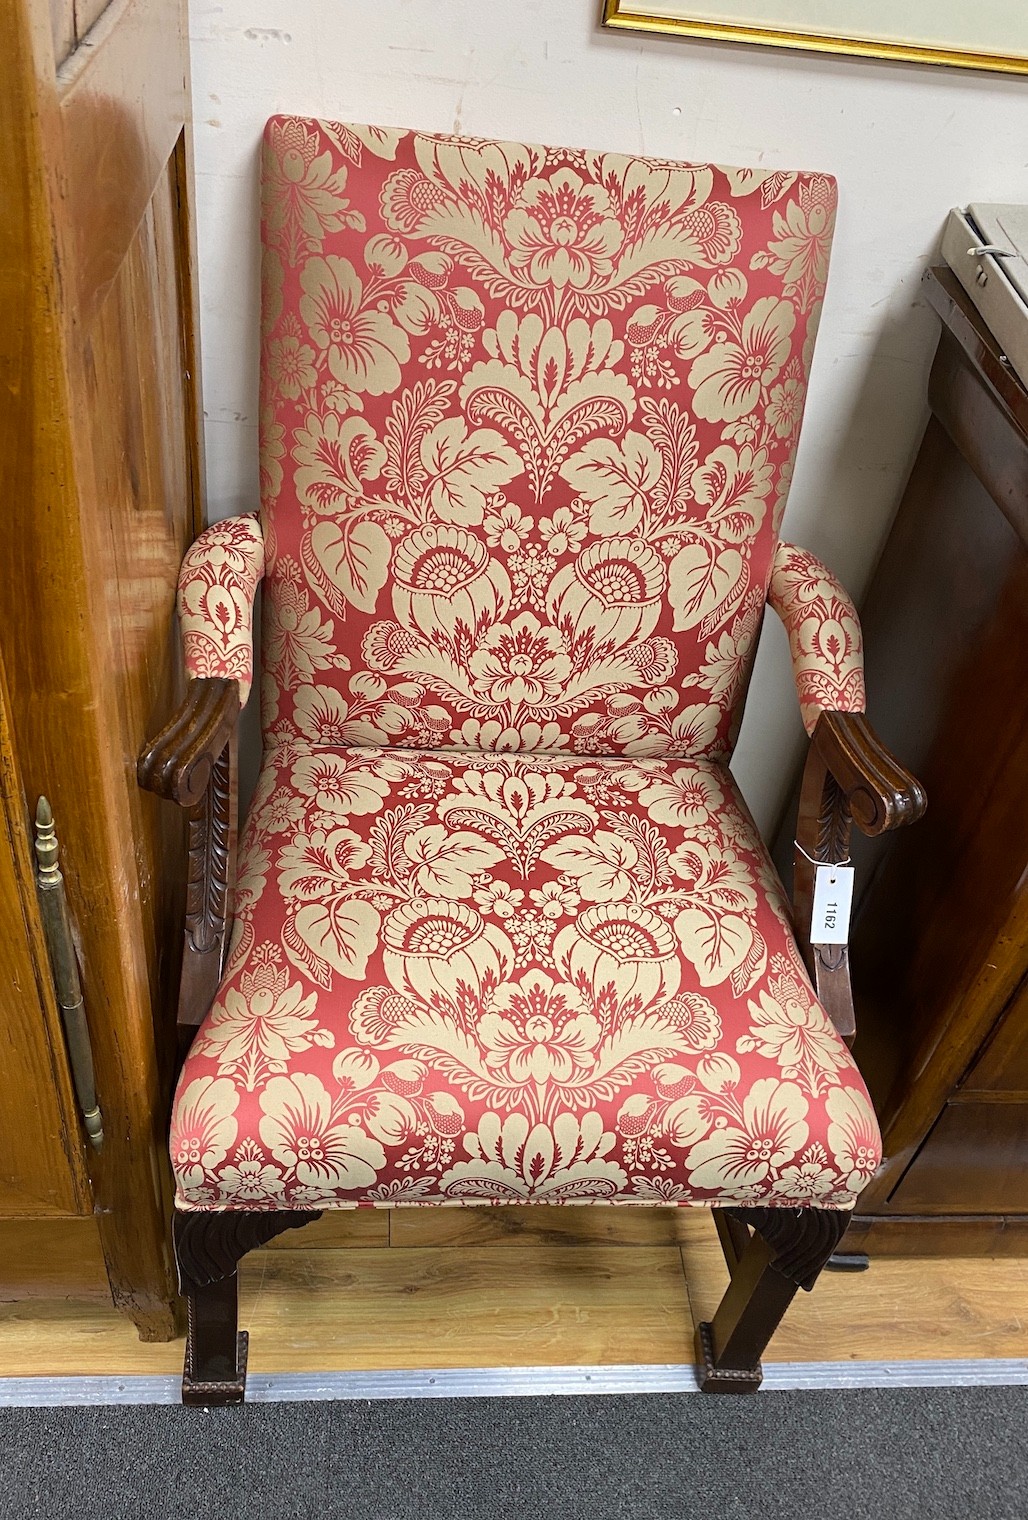 A George III style mahogany elbow chair, width 84cm, depth 67cm, height 101cm